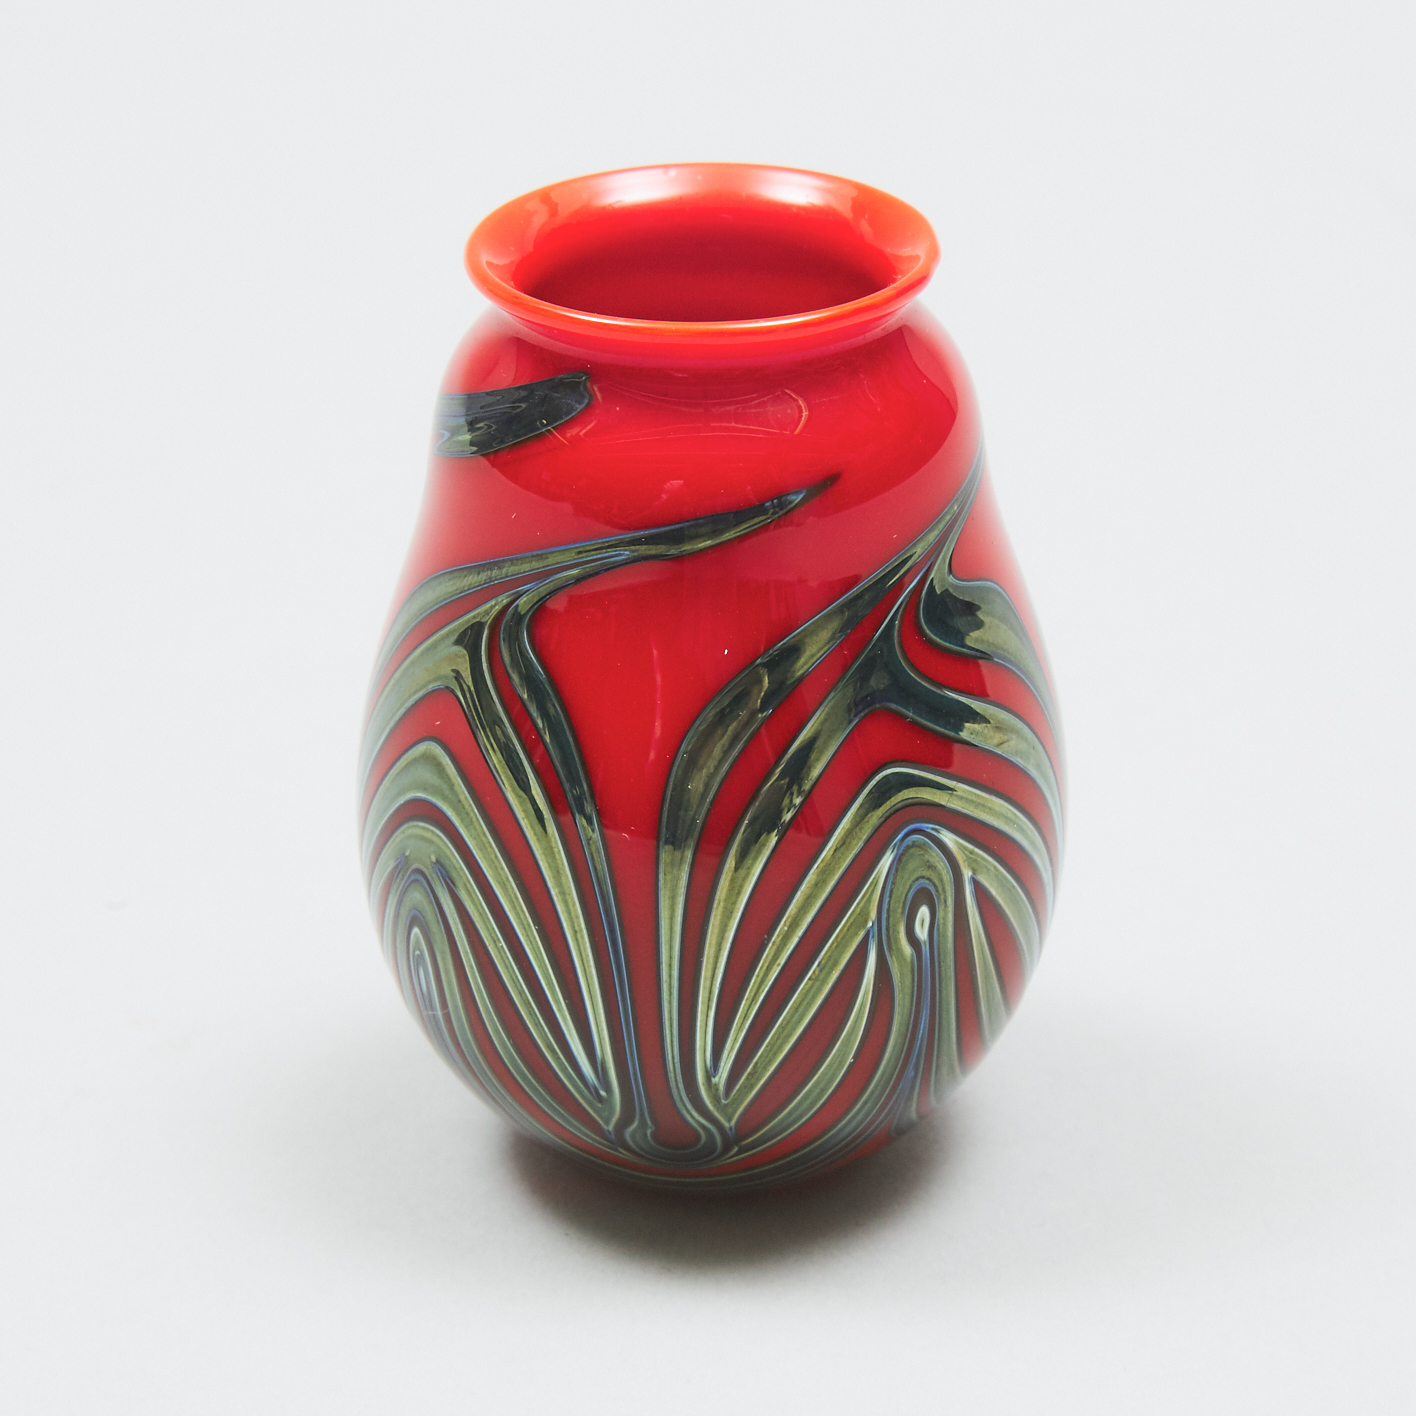 Charles Lotton (American, b.1935), Miniature Glass Vase, 1980